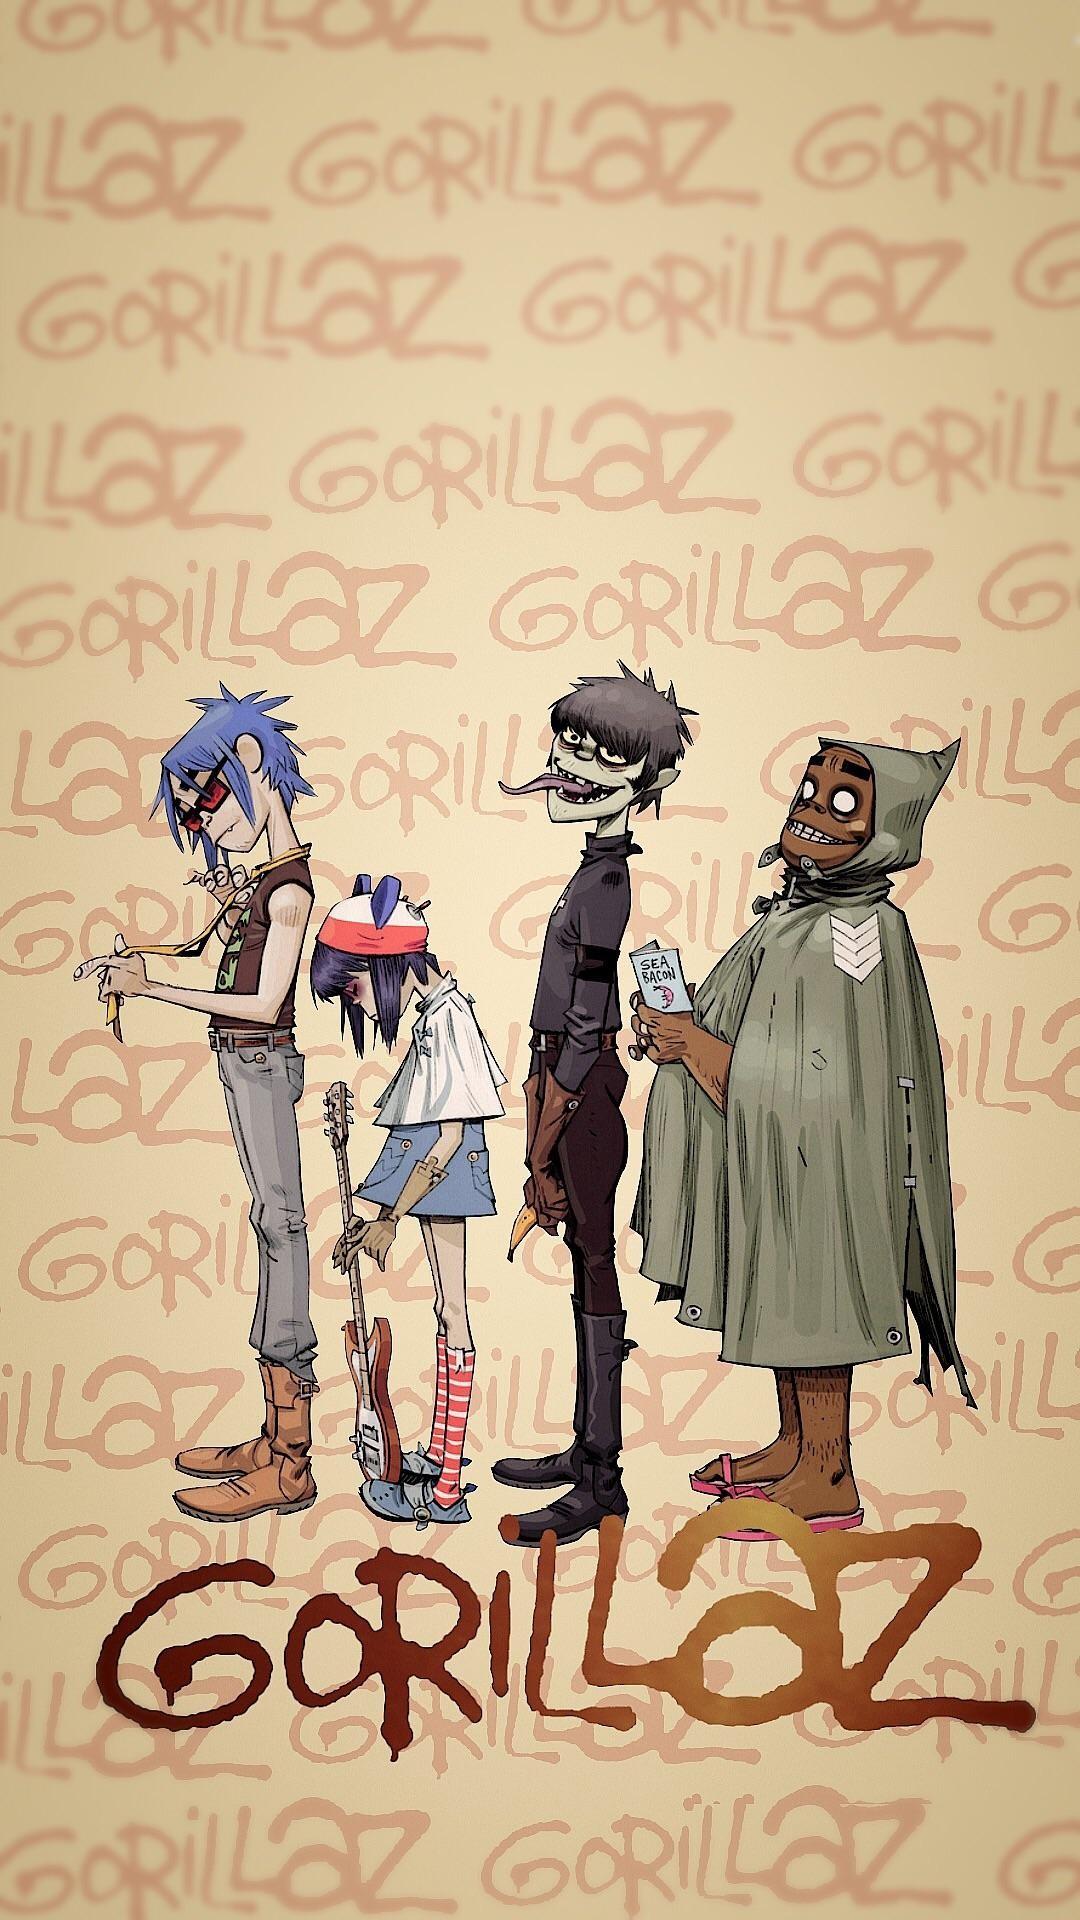 My own Gorillaz IPhone wallpaper by brightonskinner on DeviantArt